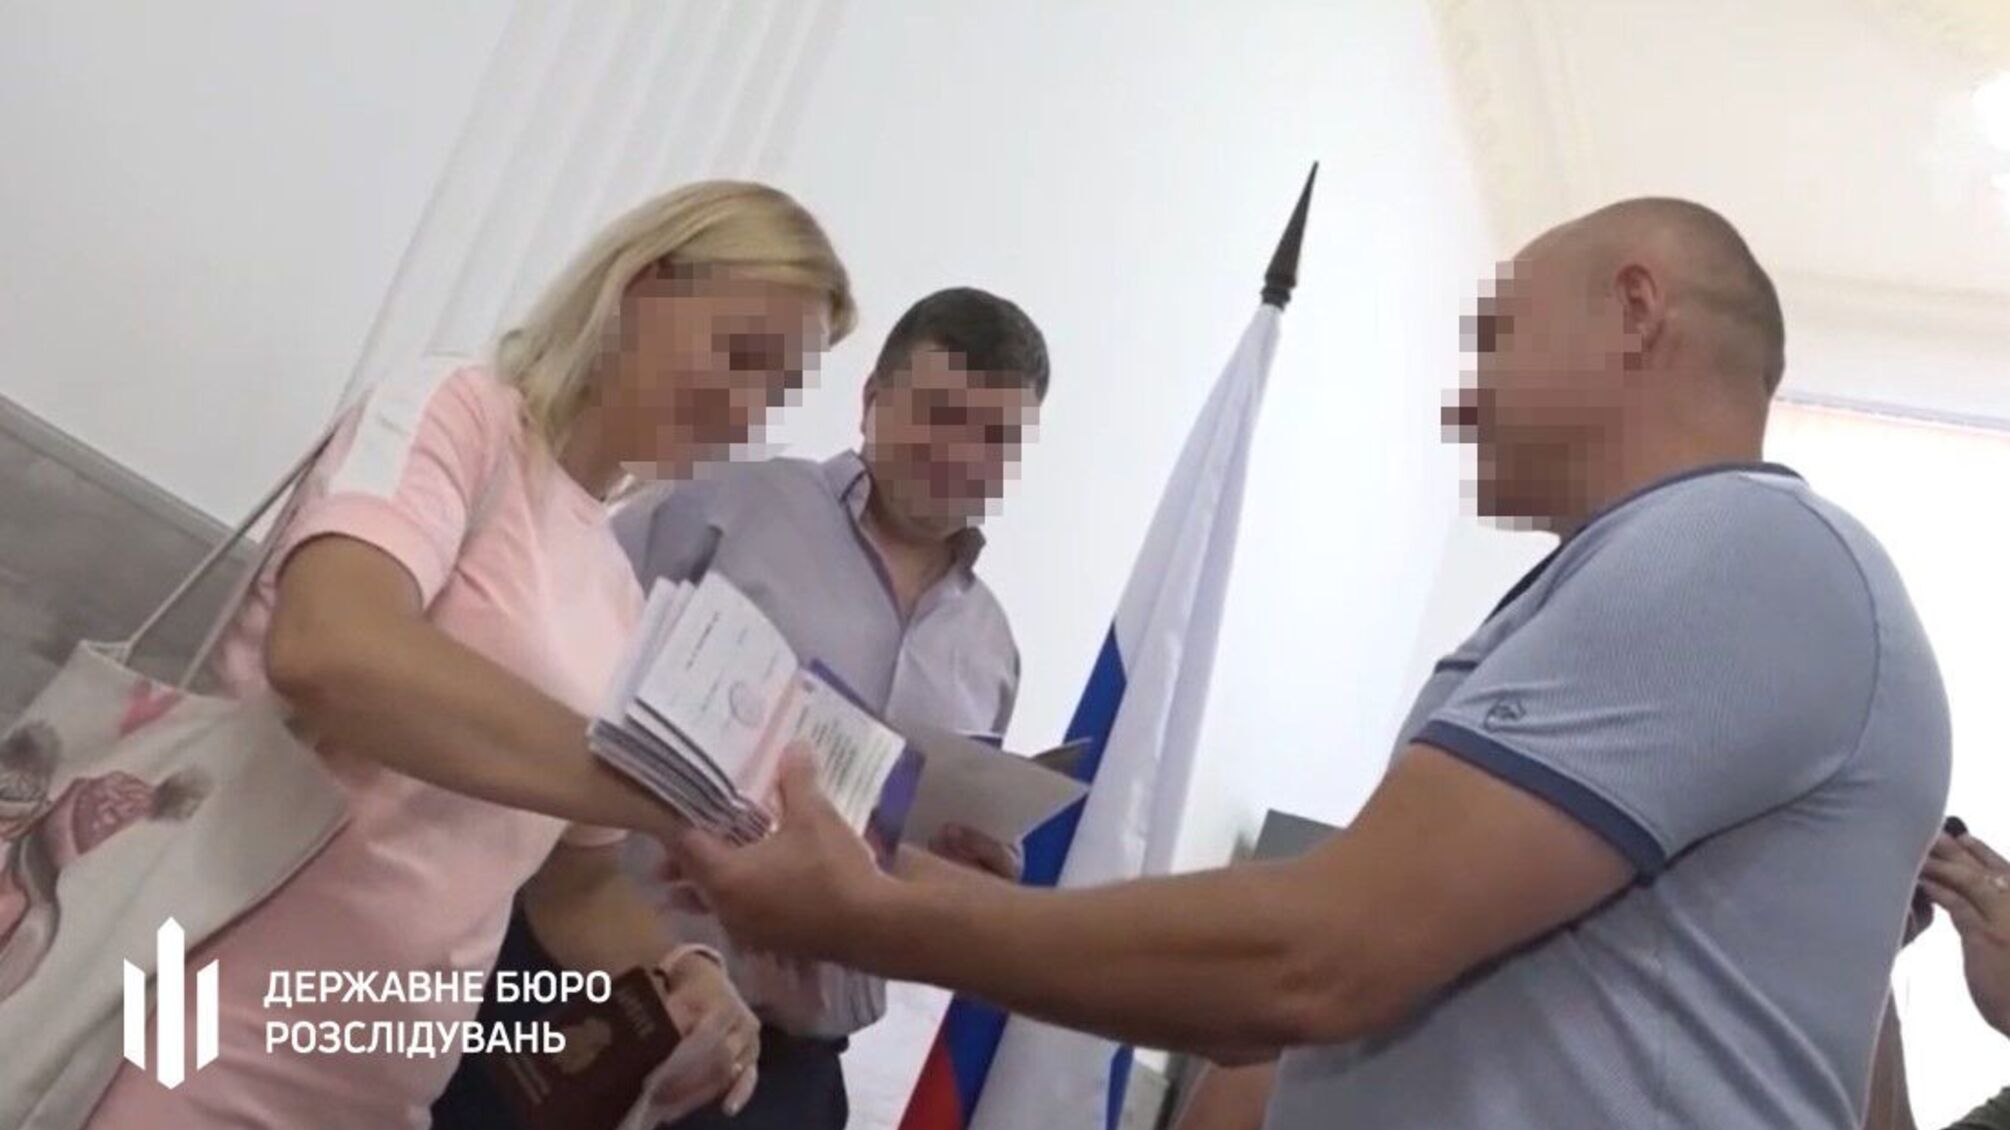 Раздает российские паспорта: предателю из Бердянска объявлено подозрение (фото)